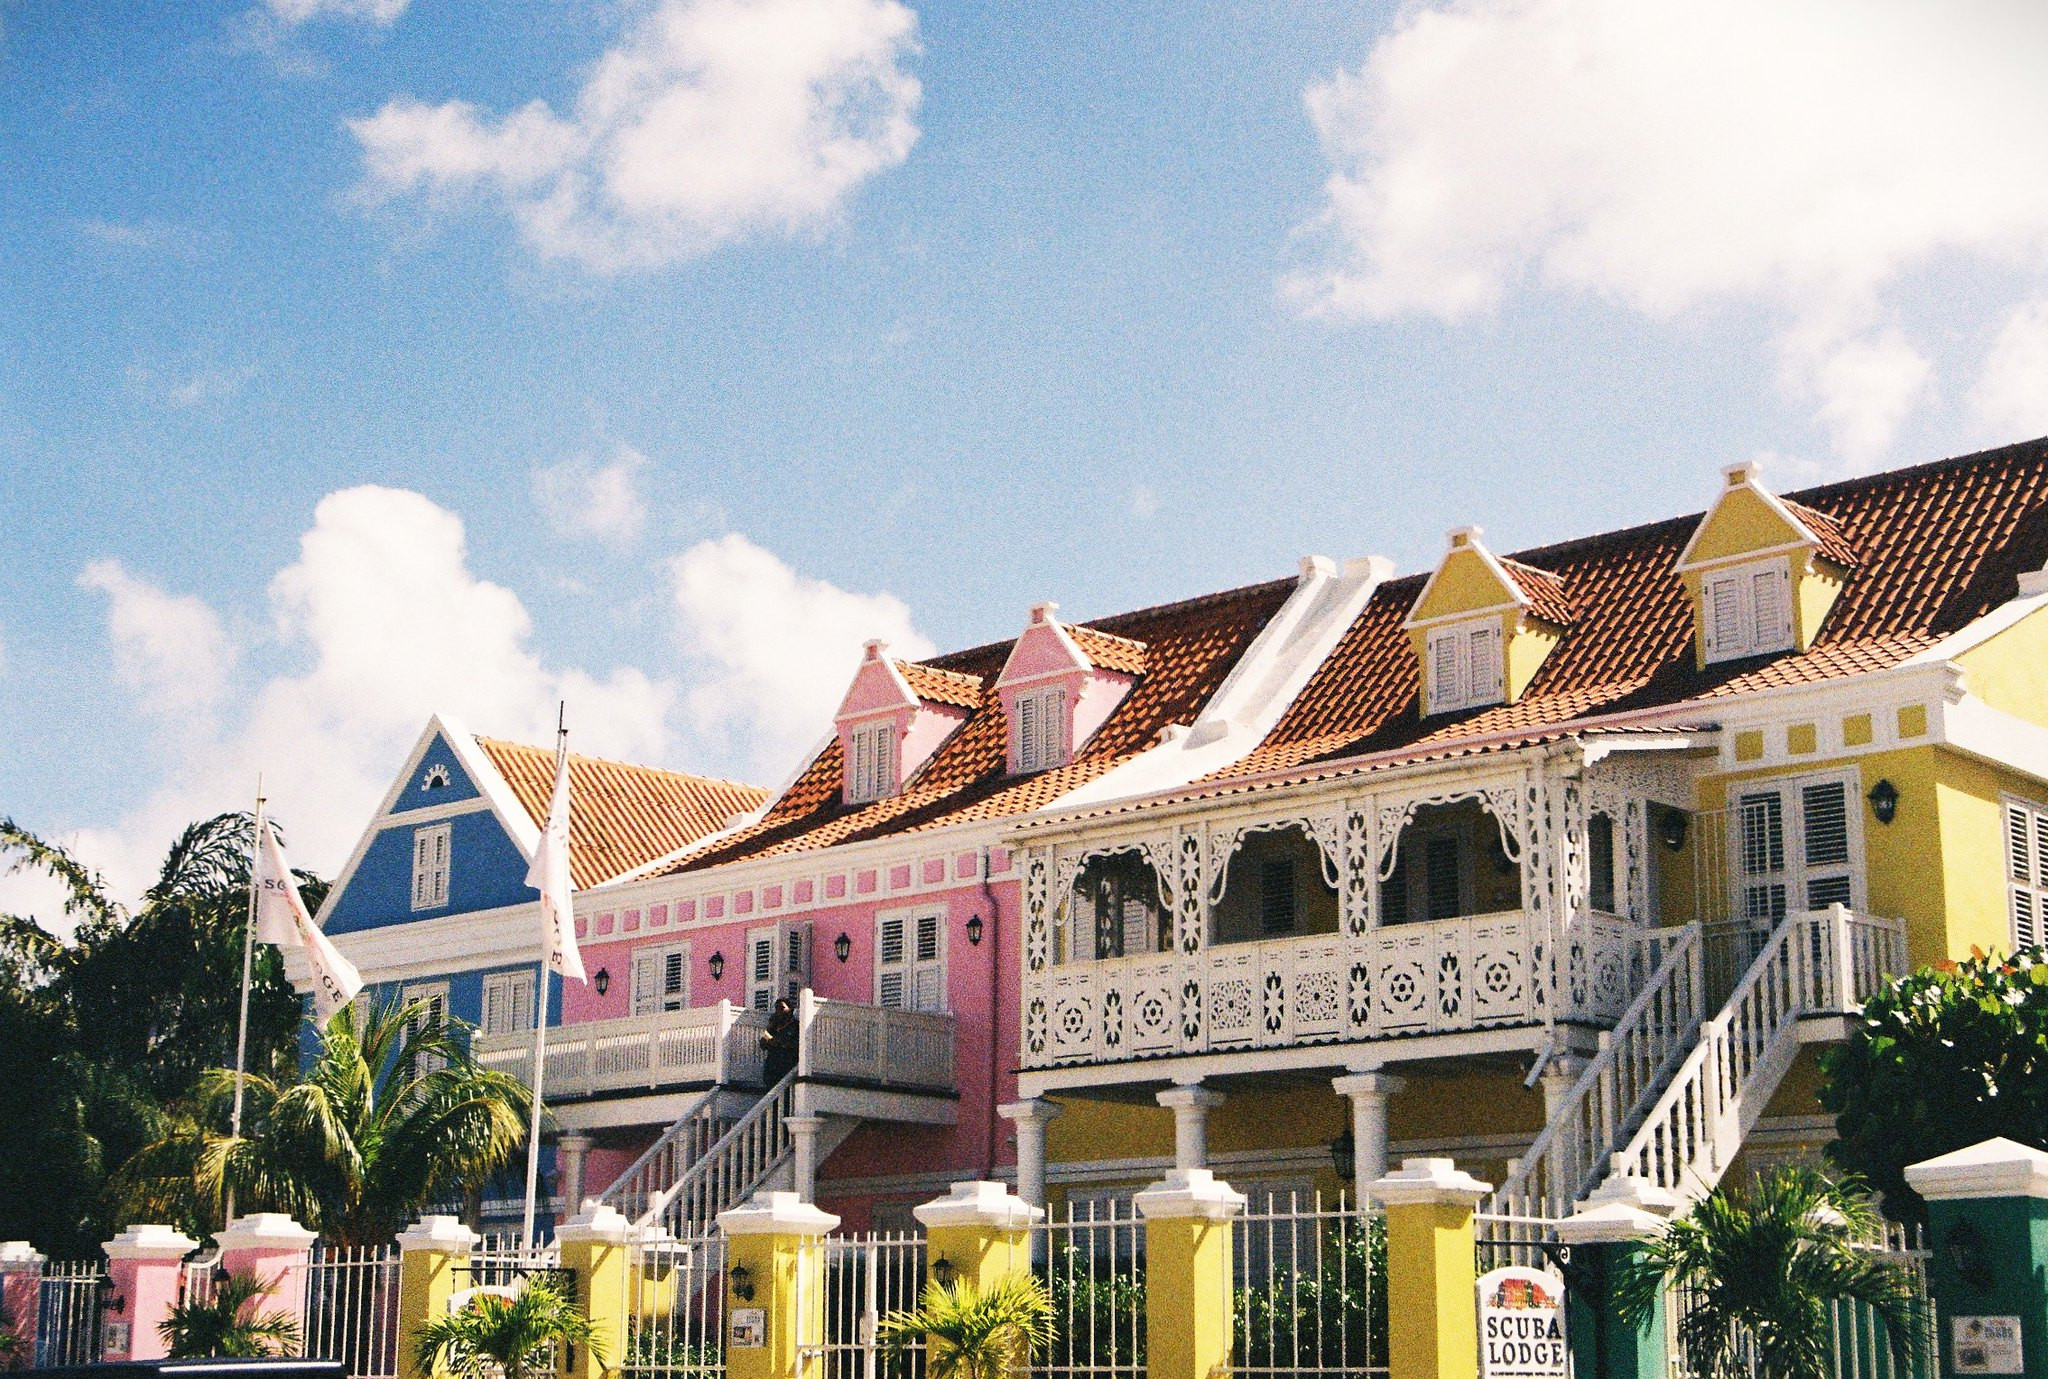 PJ2/PC2Z Willemstad, Curacao Island